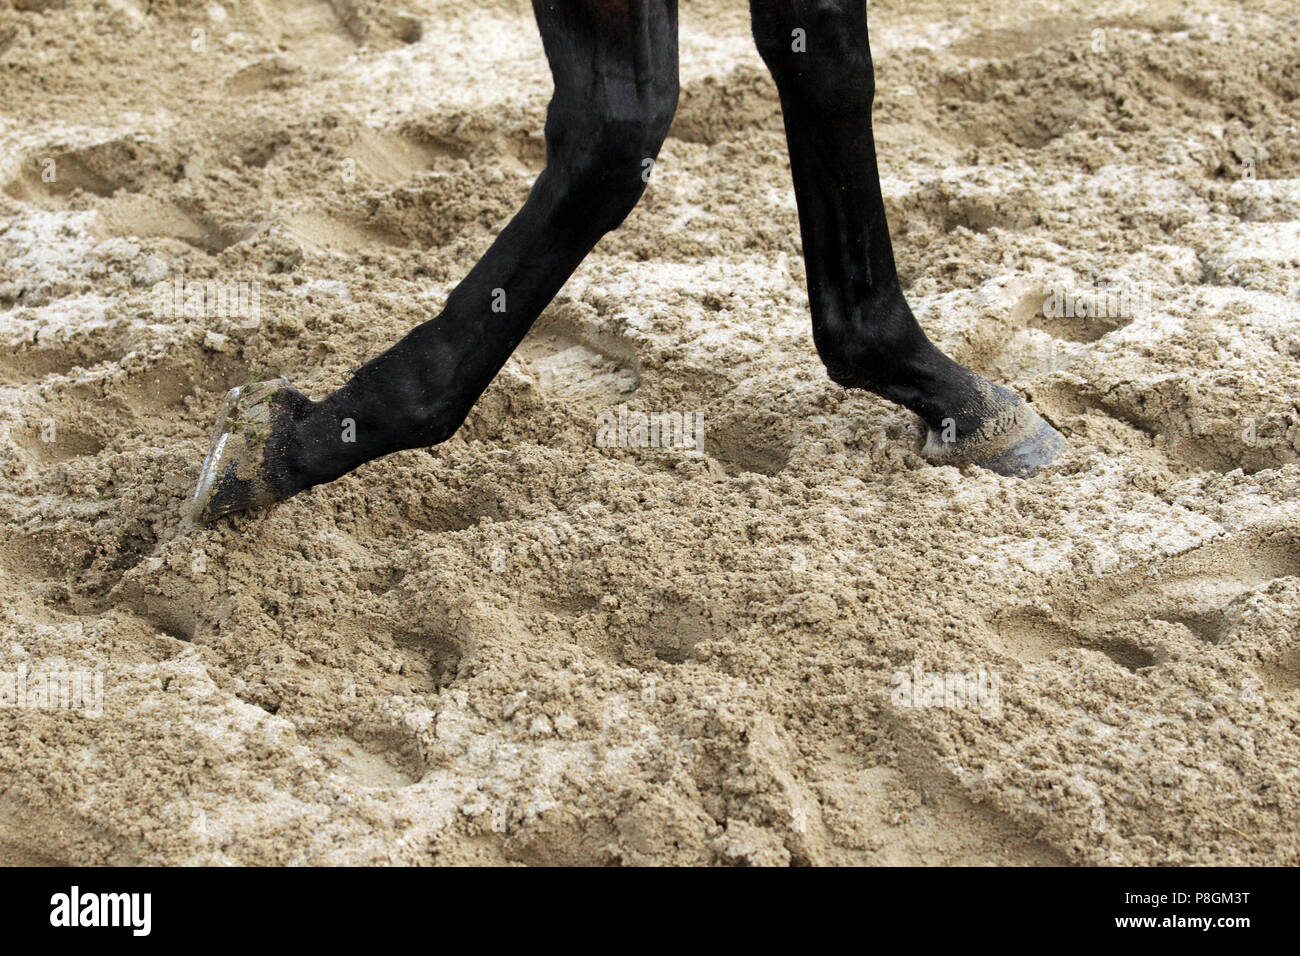 Dresden, horse's legs run through deep sand Stock Photo